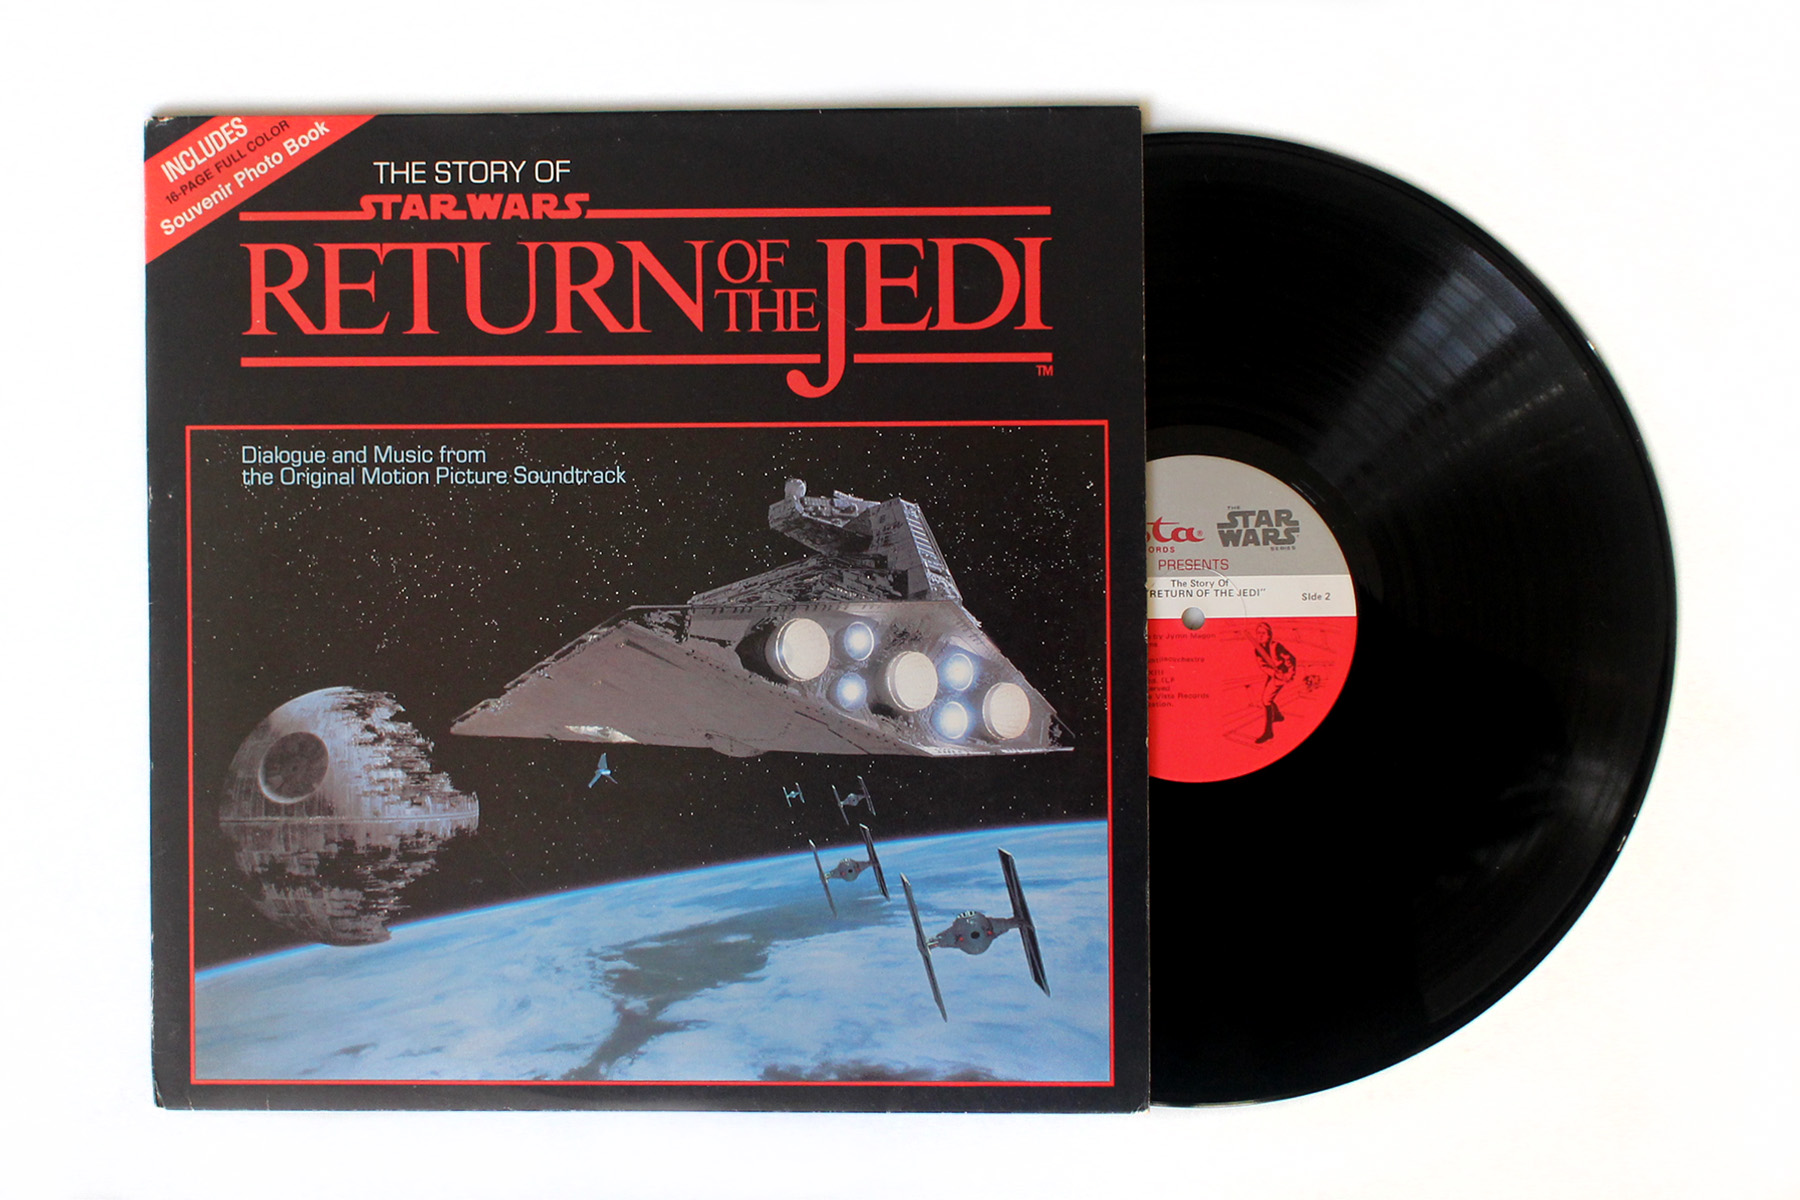 The Story of Return of Jedi on Vinyl - 1983 - SWNZ, Star Wars New Zealand